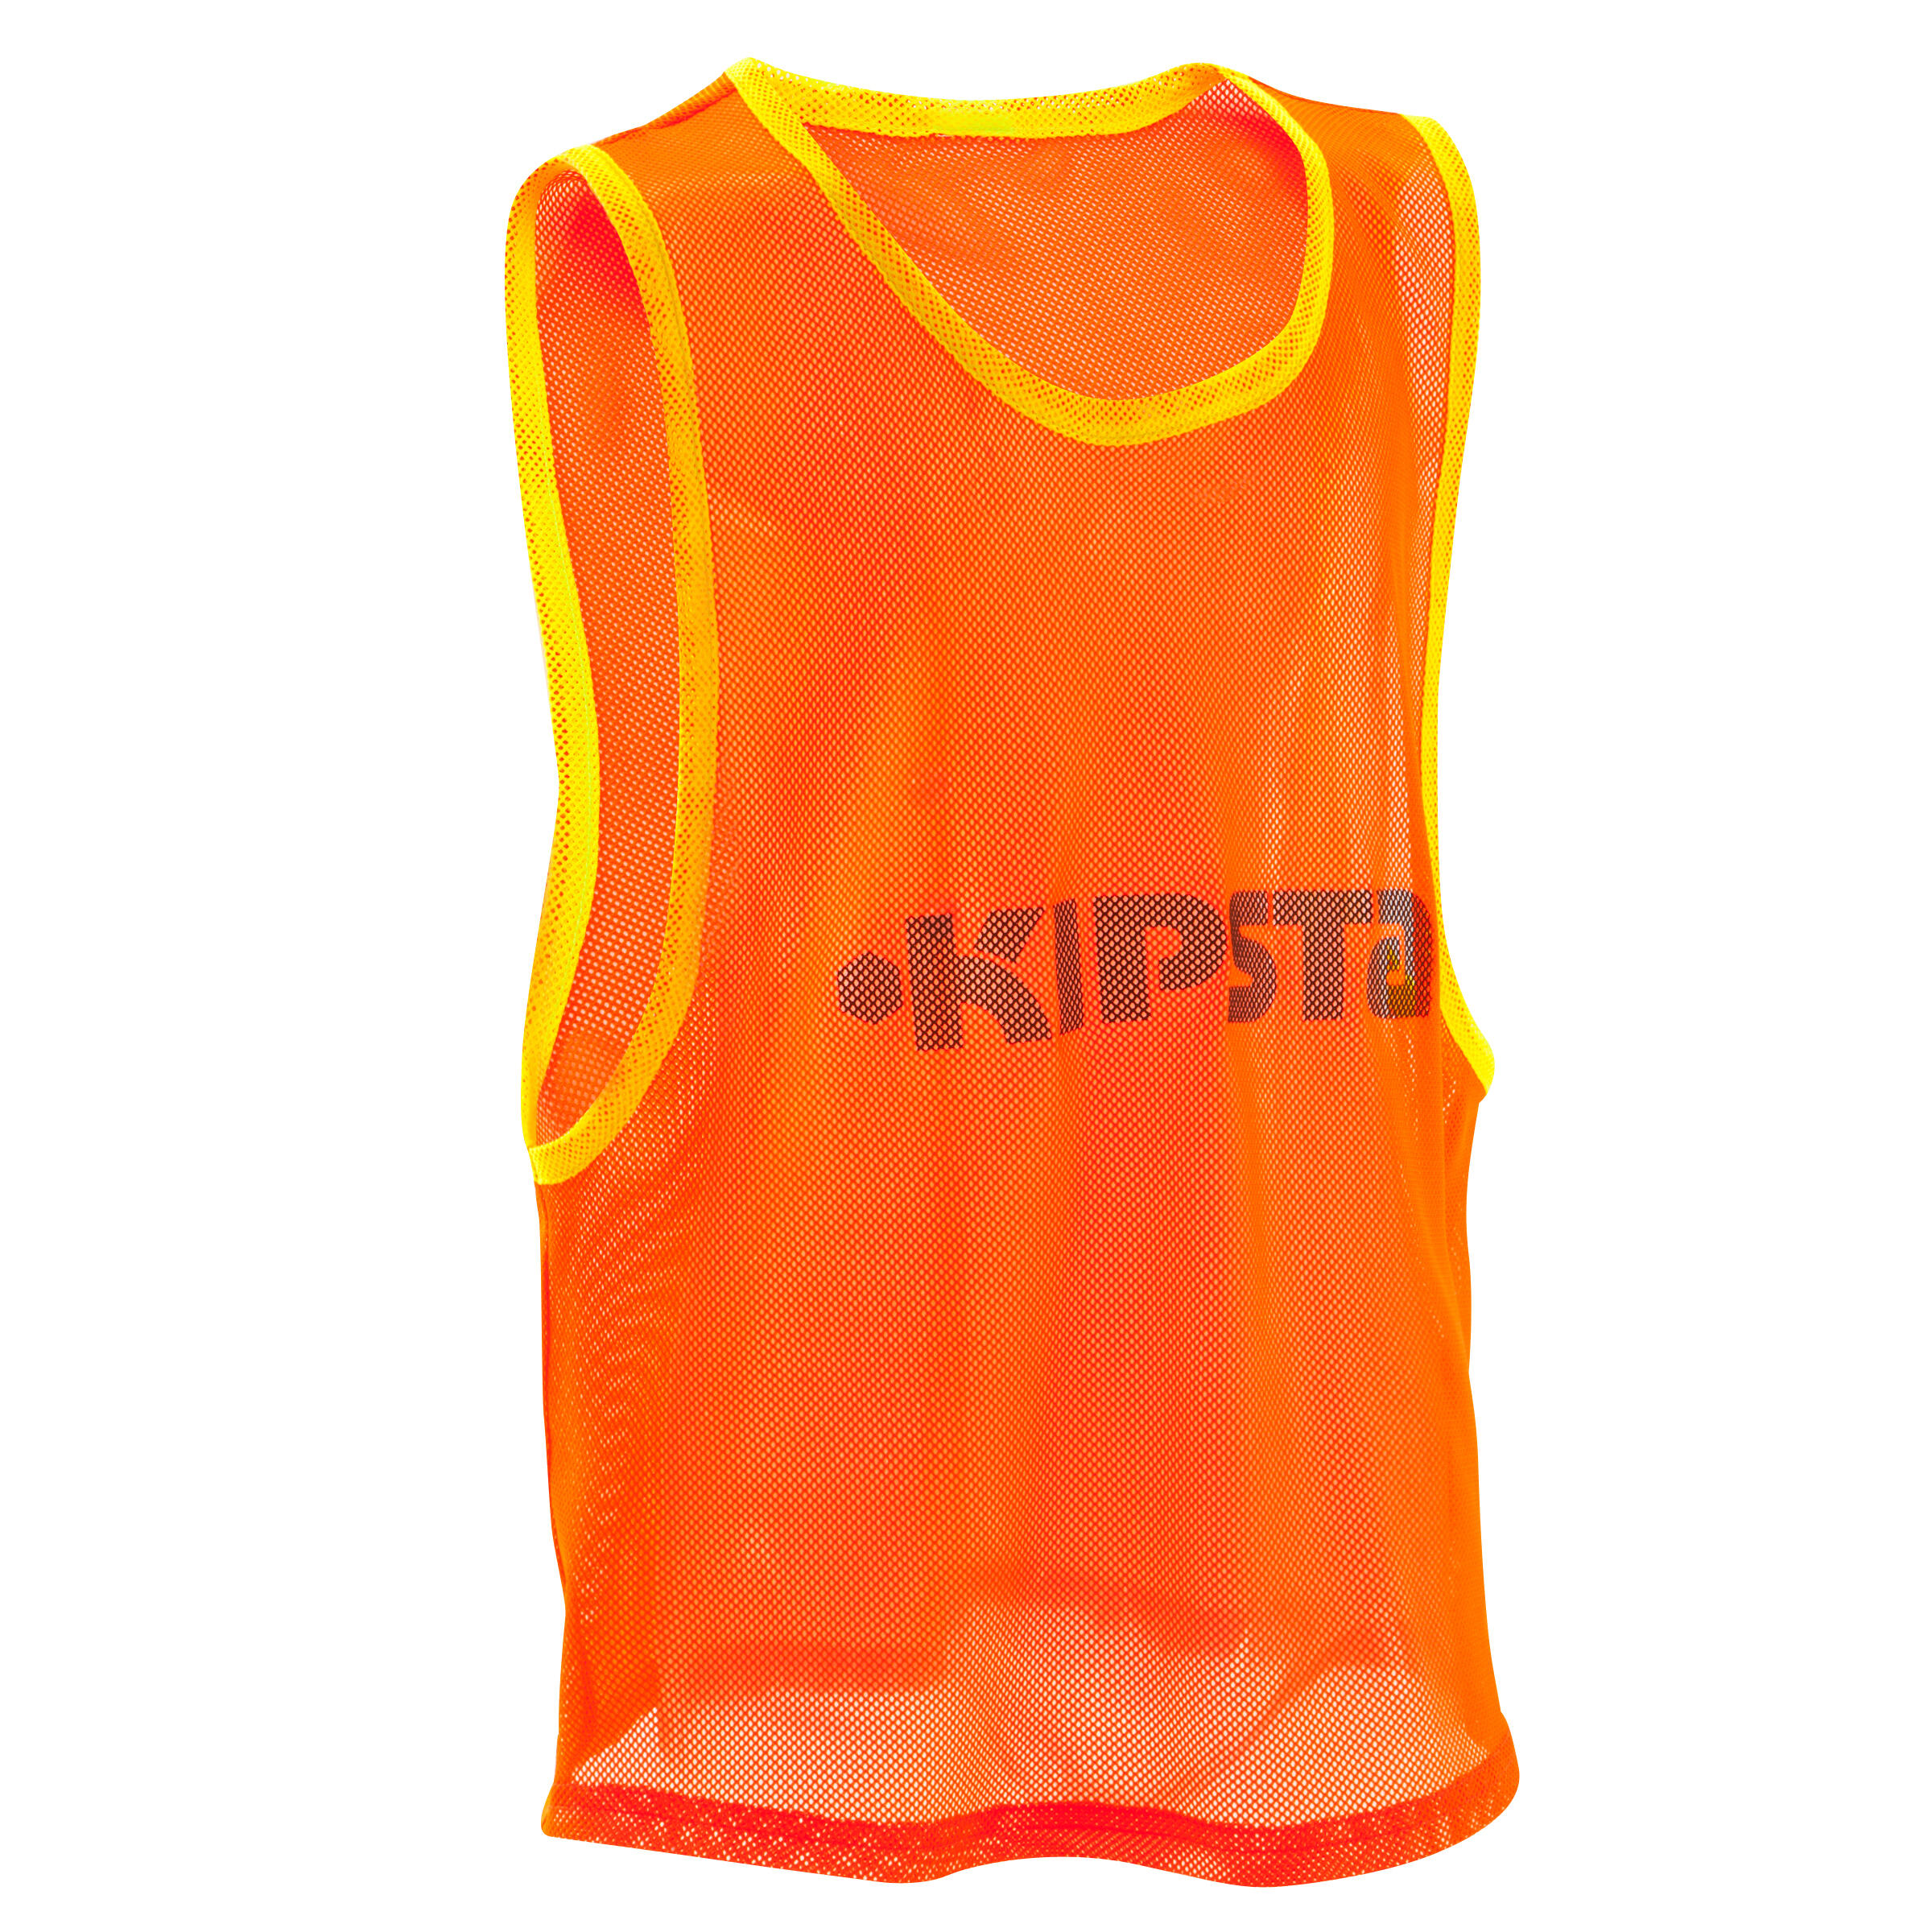 KIPSTA Kids' Team Sports Bib - Orange